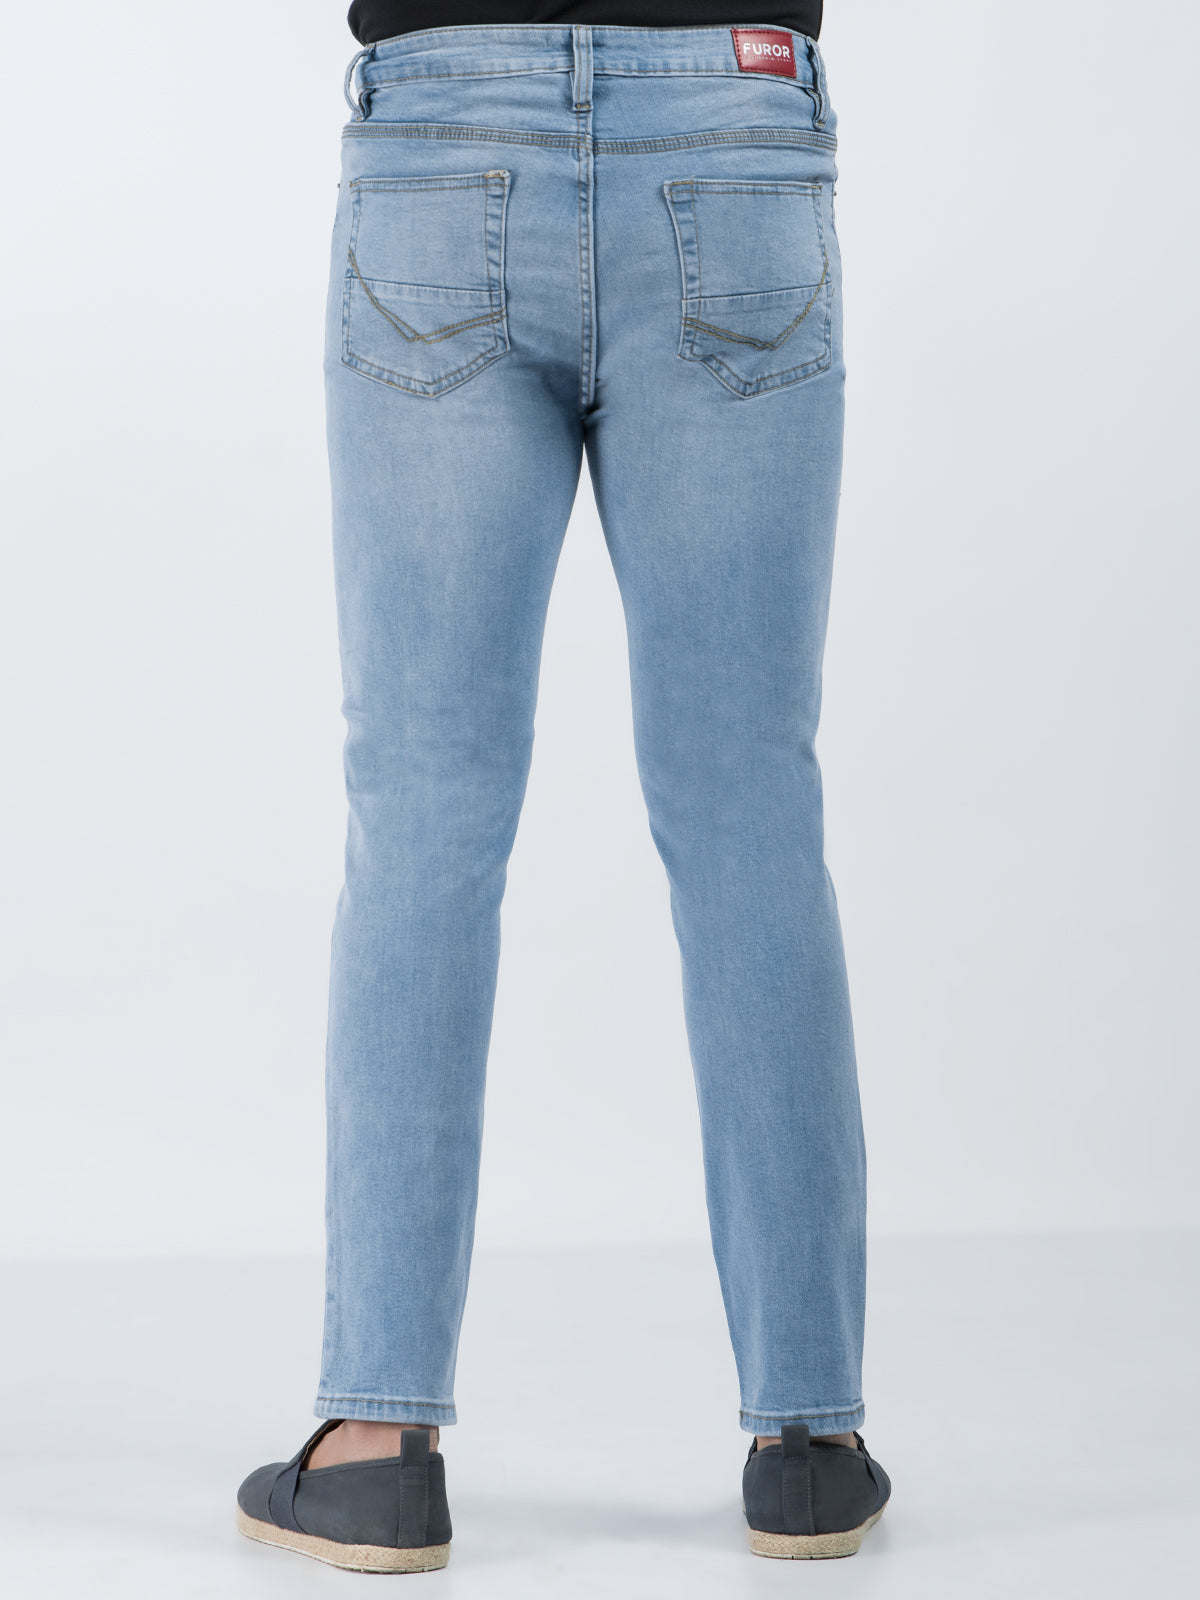 Men's Powder Blue Denim Jeans - FMBP20-024